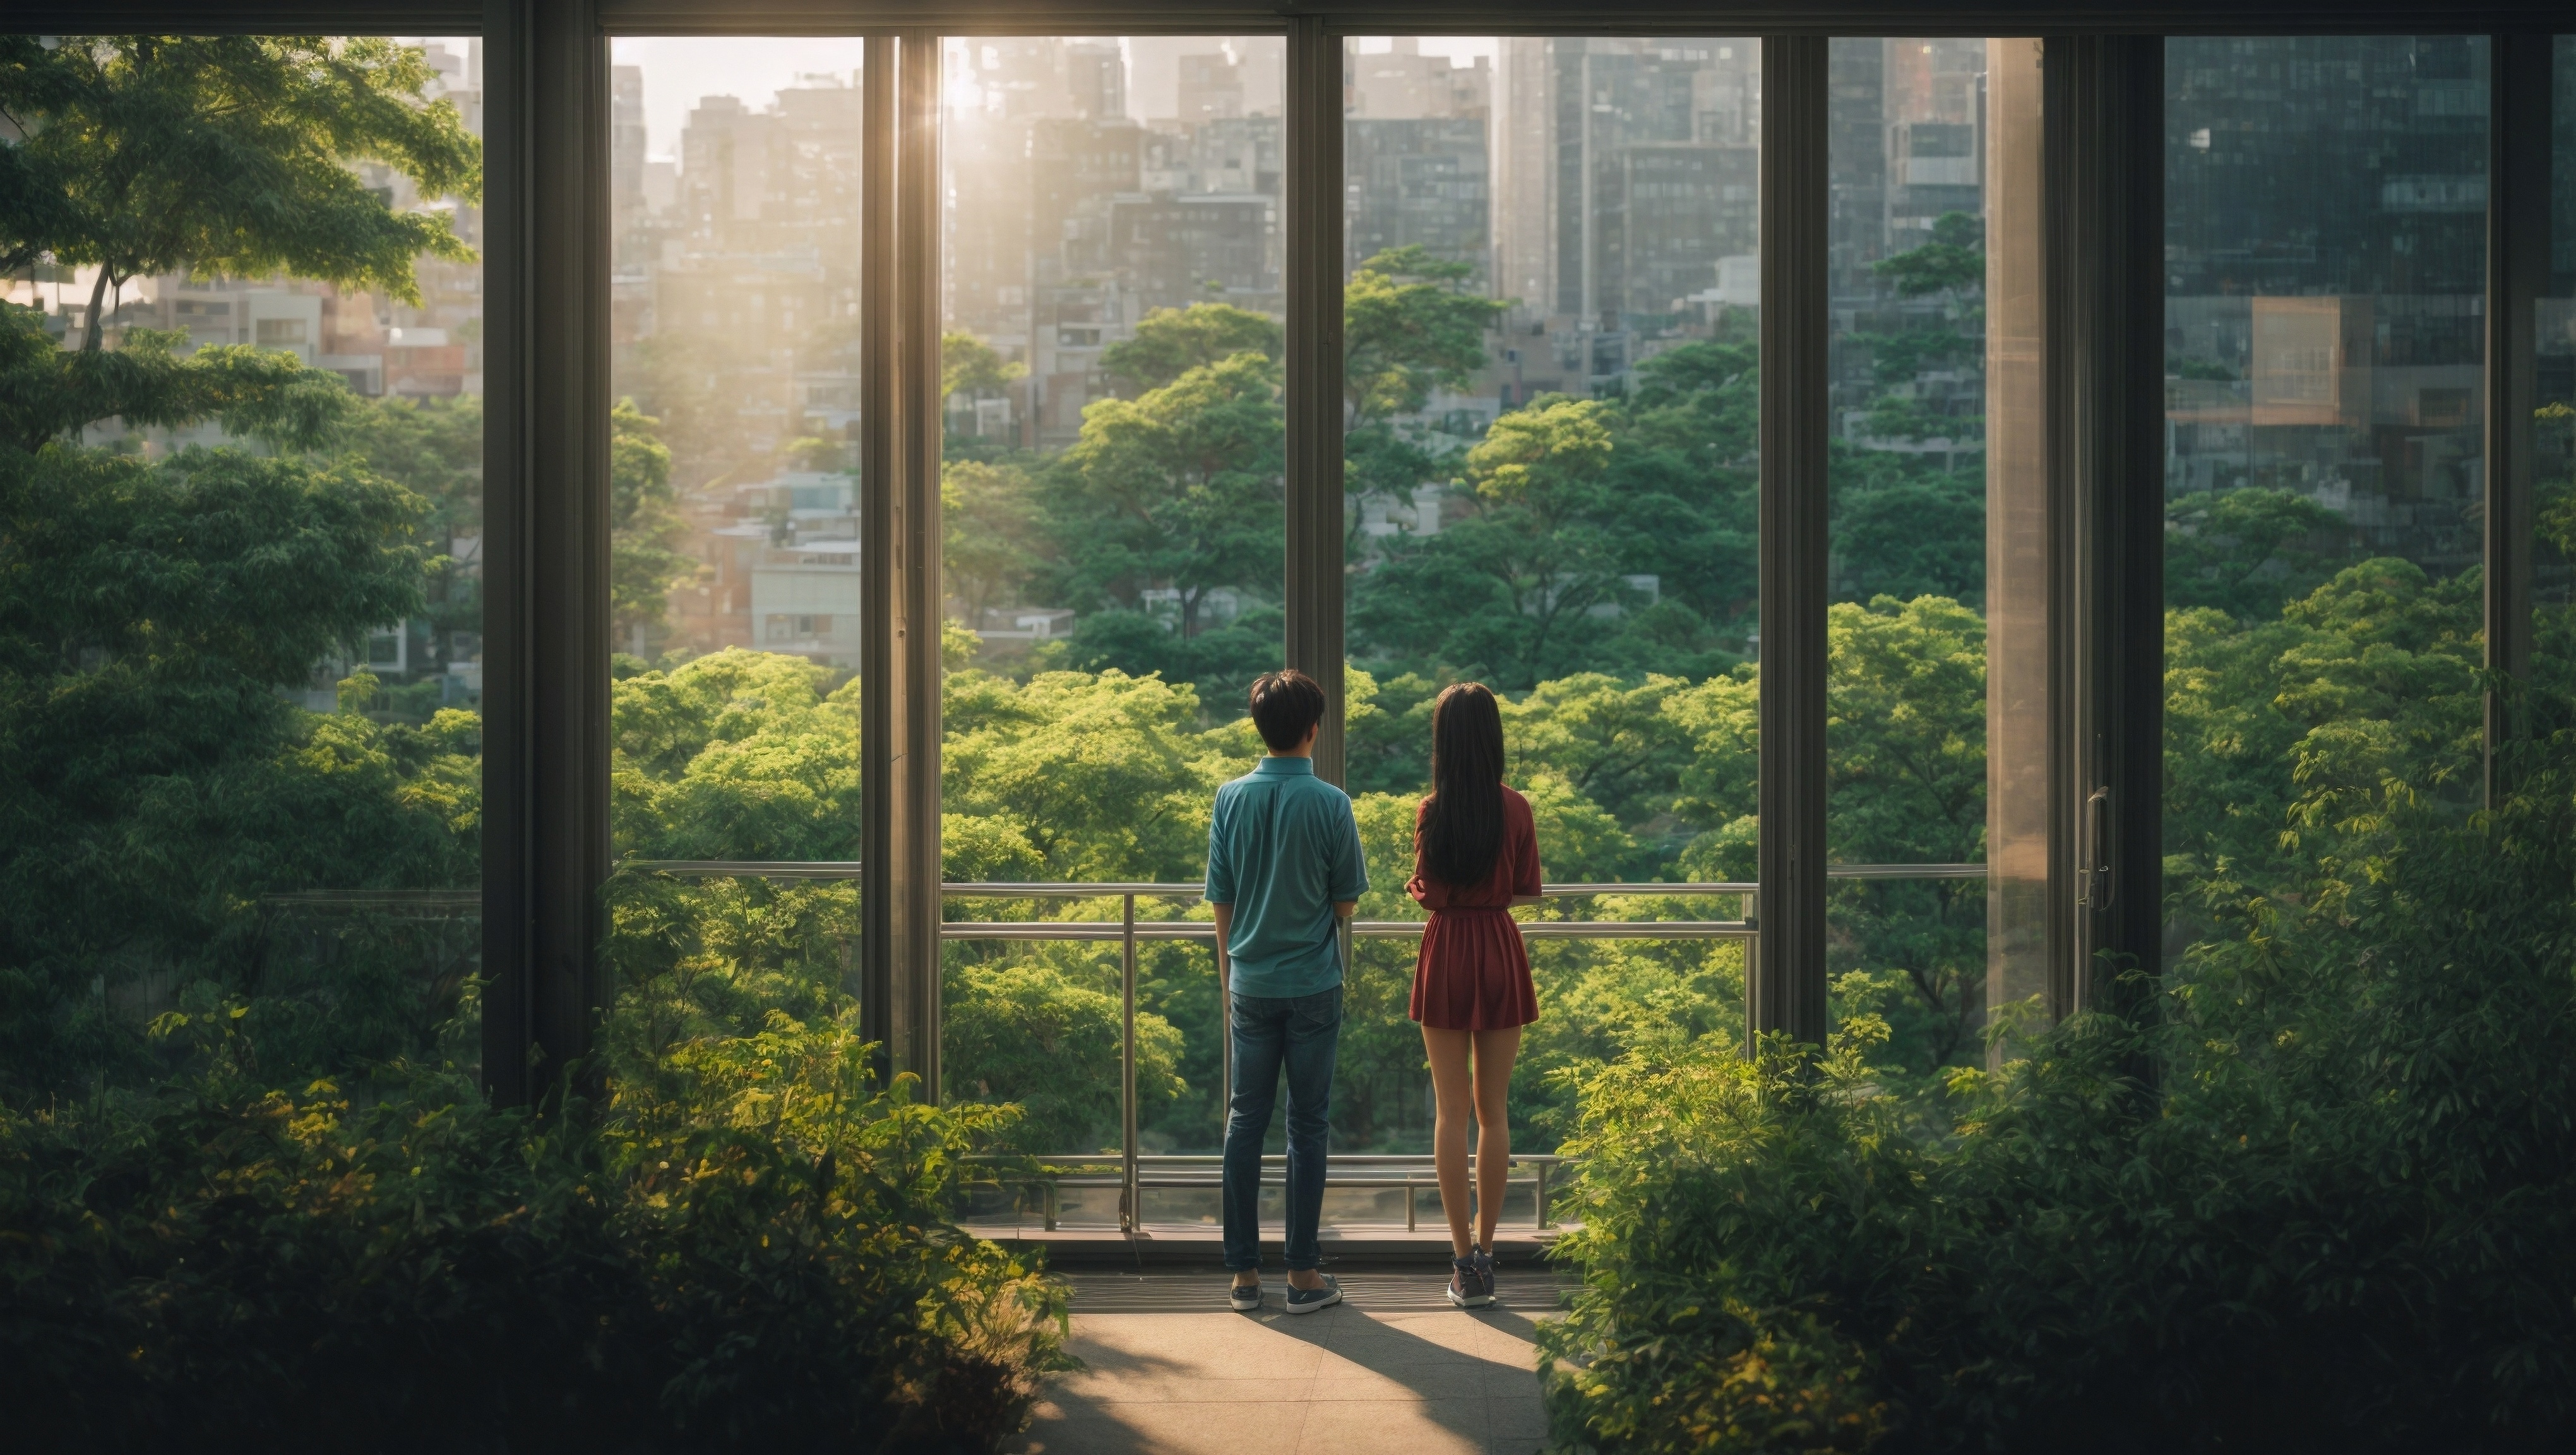 Бесплатное фото Два человека стоят на балконе и смотрят на лес.